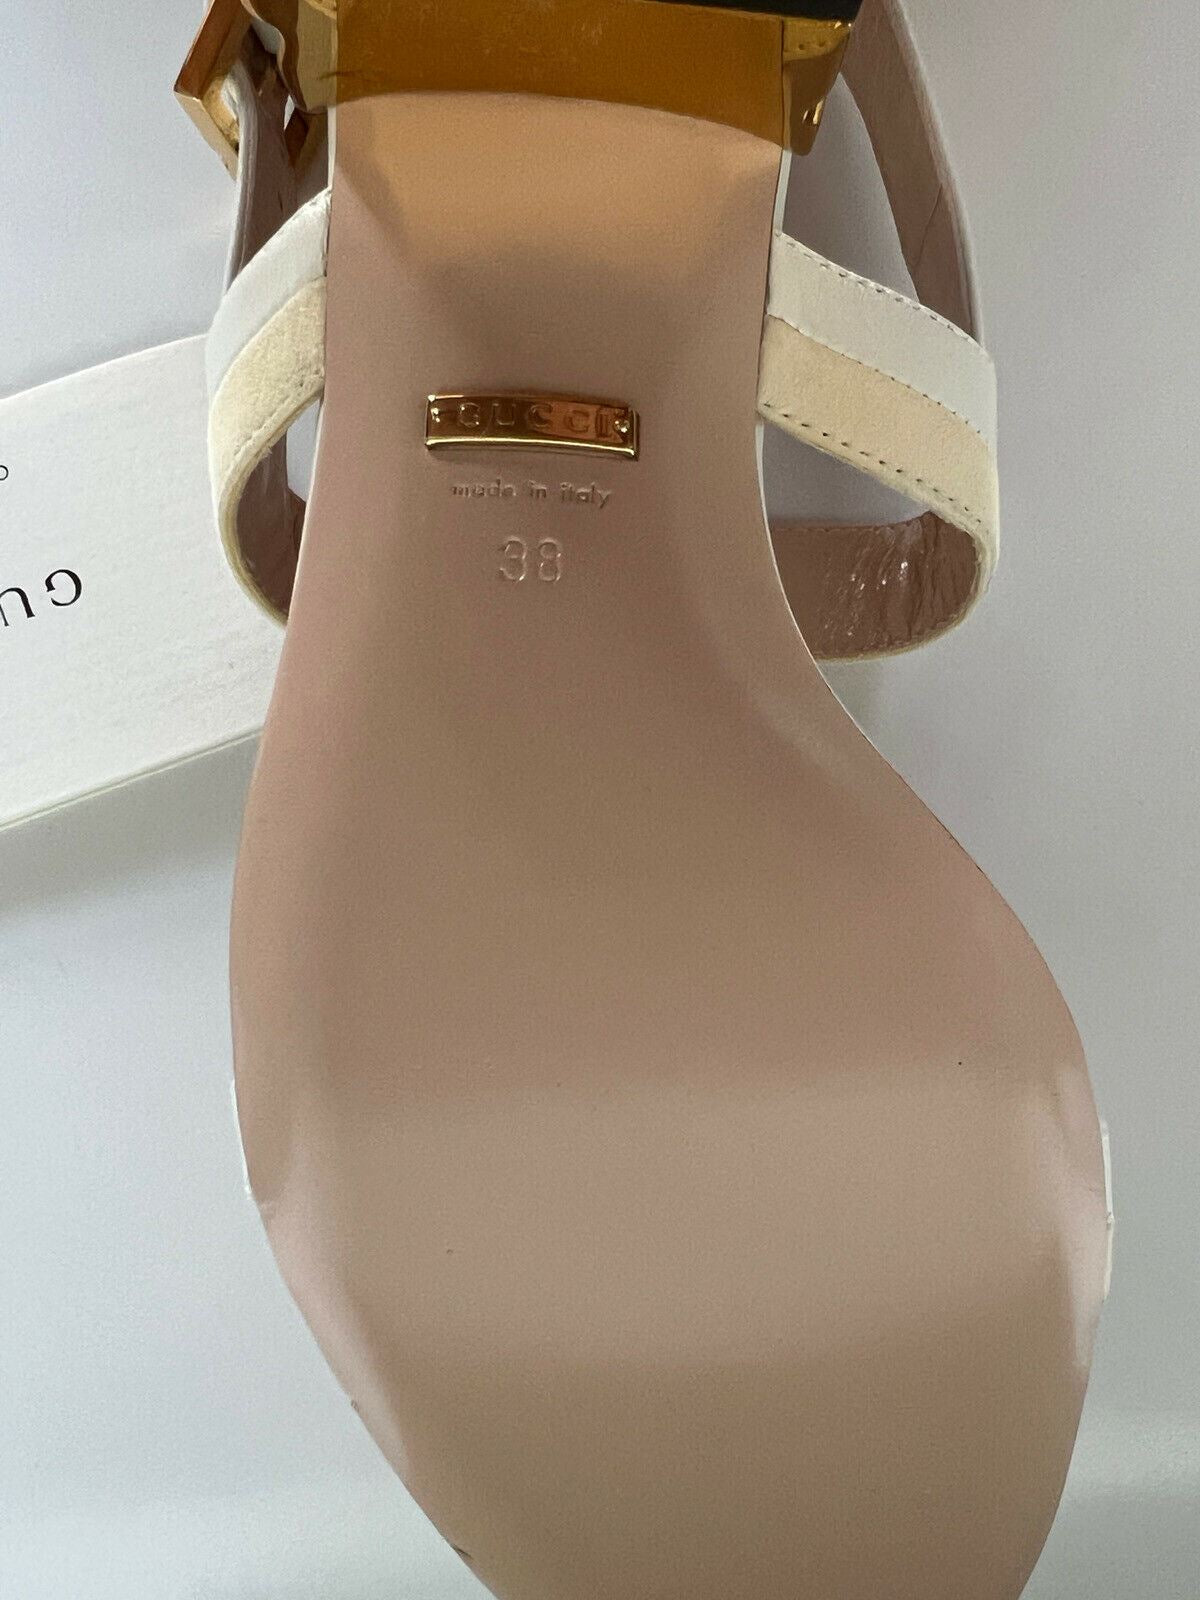 NIB $950 Gucci Women's Leather Chain-shaped Heel Sandals 8 US (38 Eu) IT 655409